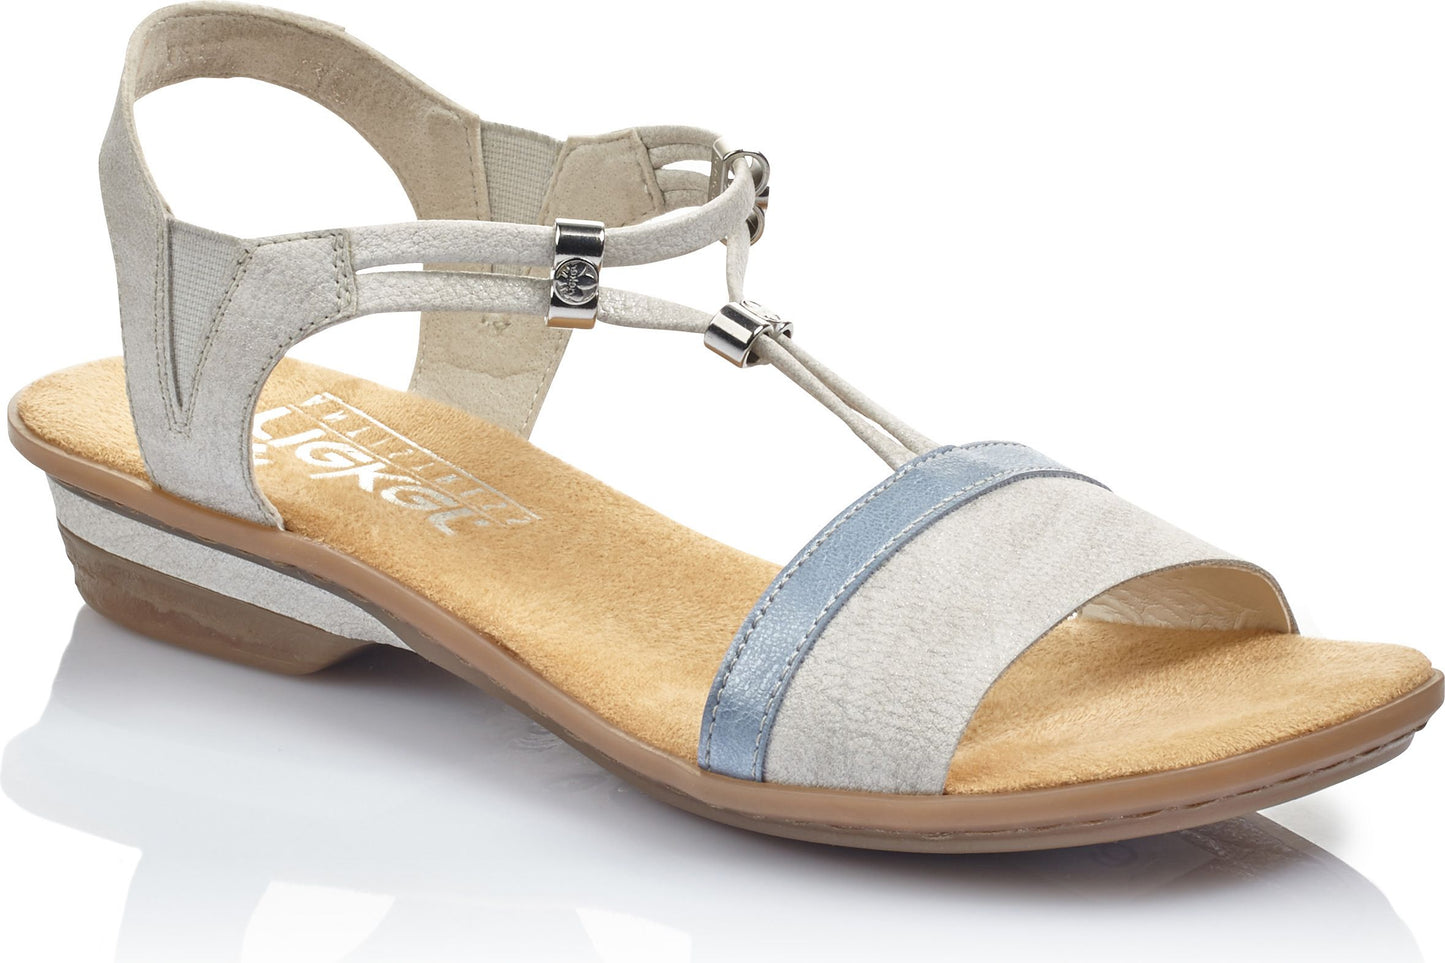 Rieker Sandals White/silver Strappy Sandal